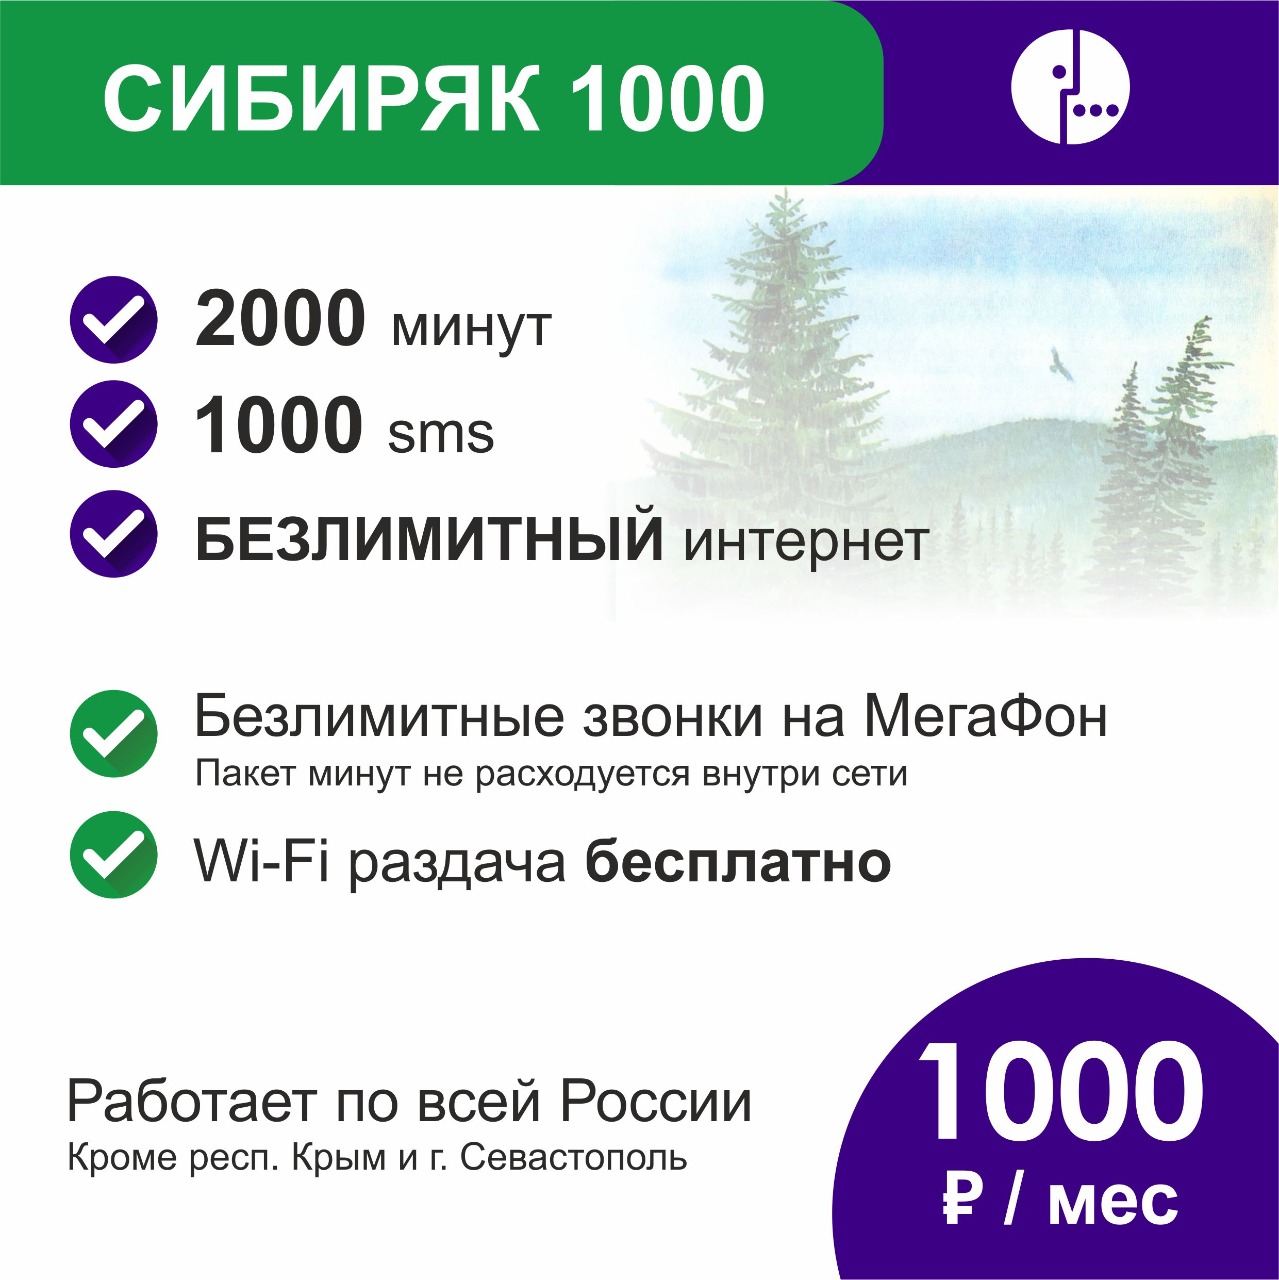 Саяногорск Инфо - whatsapp-image-2020-08-21-at-114742-1.jpeg, Скачано: 462